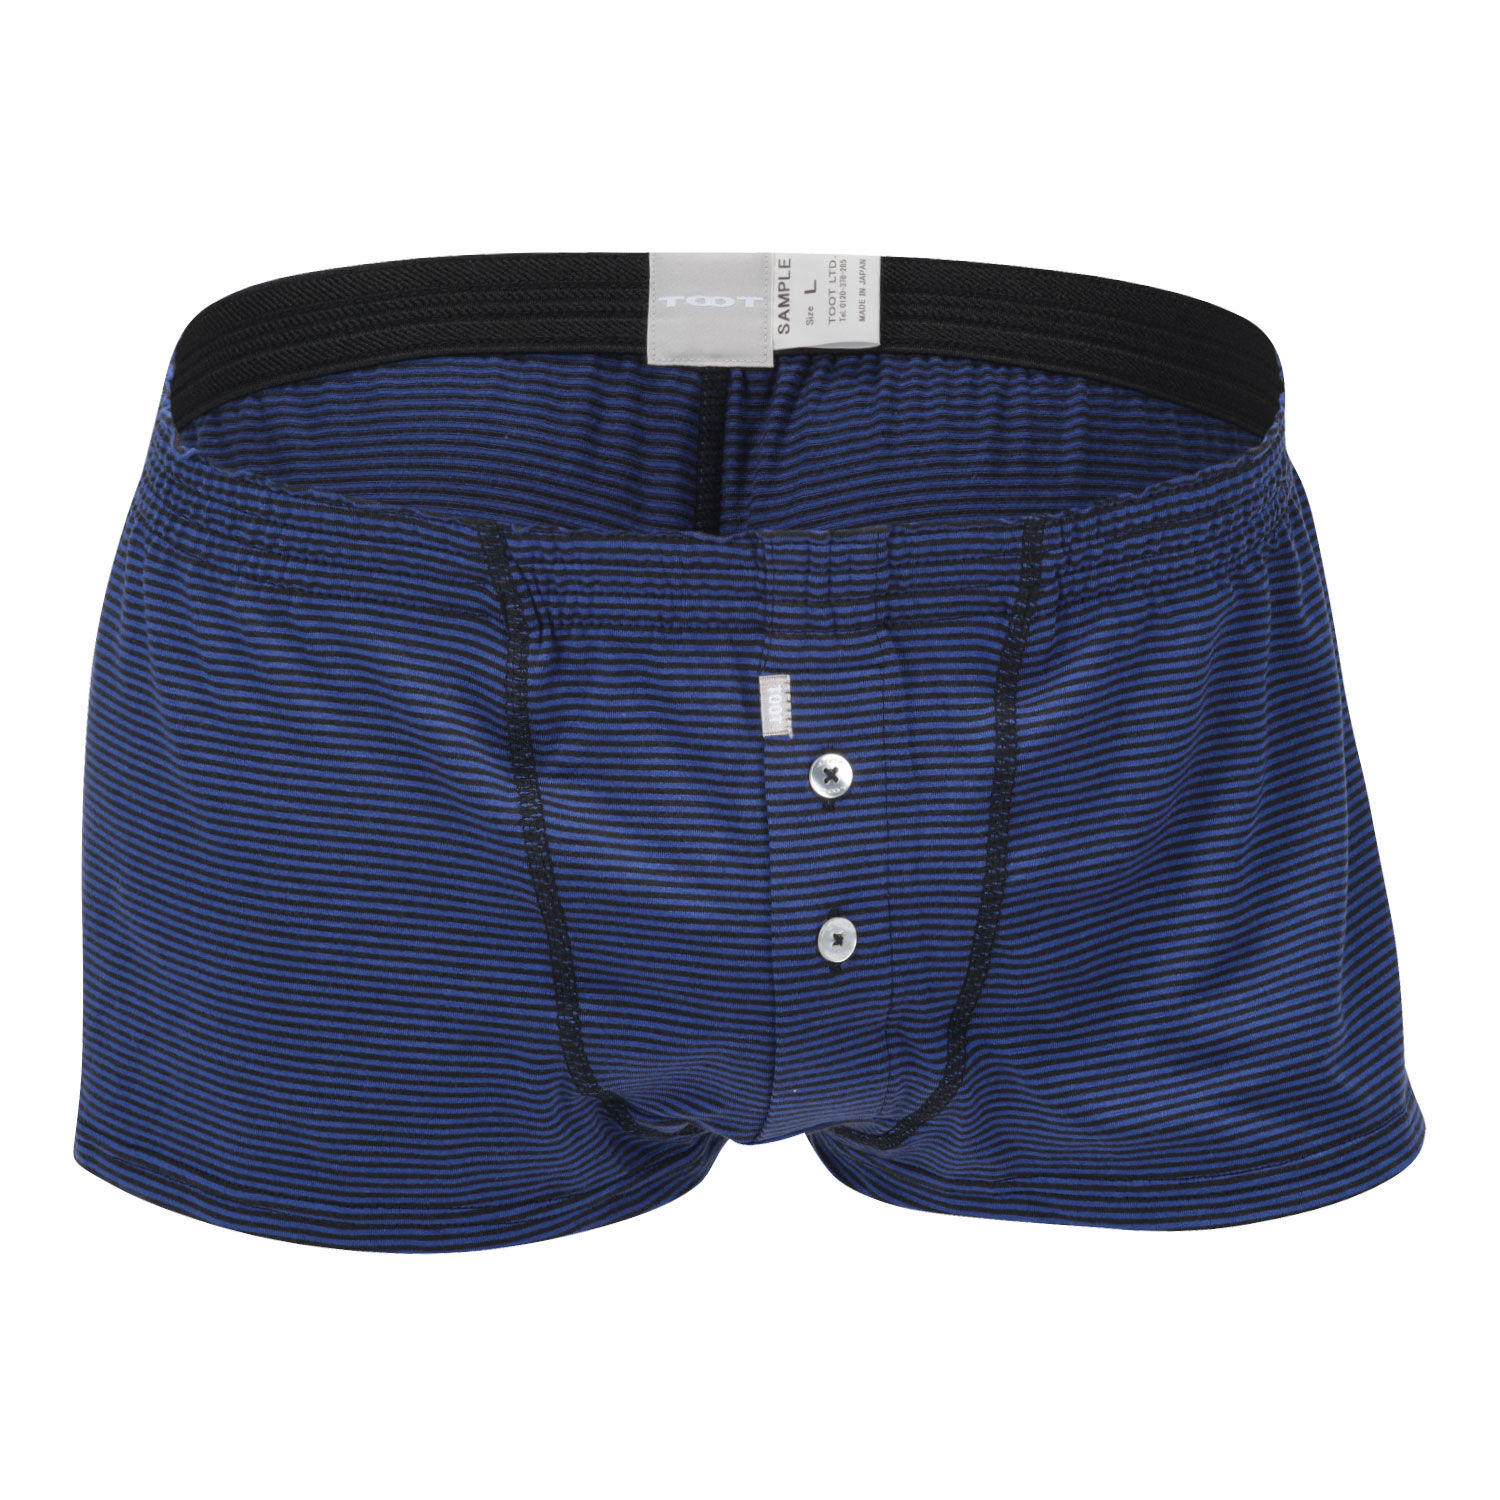 TRUNKS | Men's Underwear brand TOOT official website